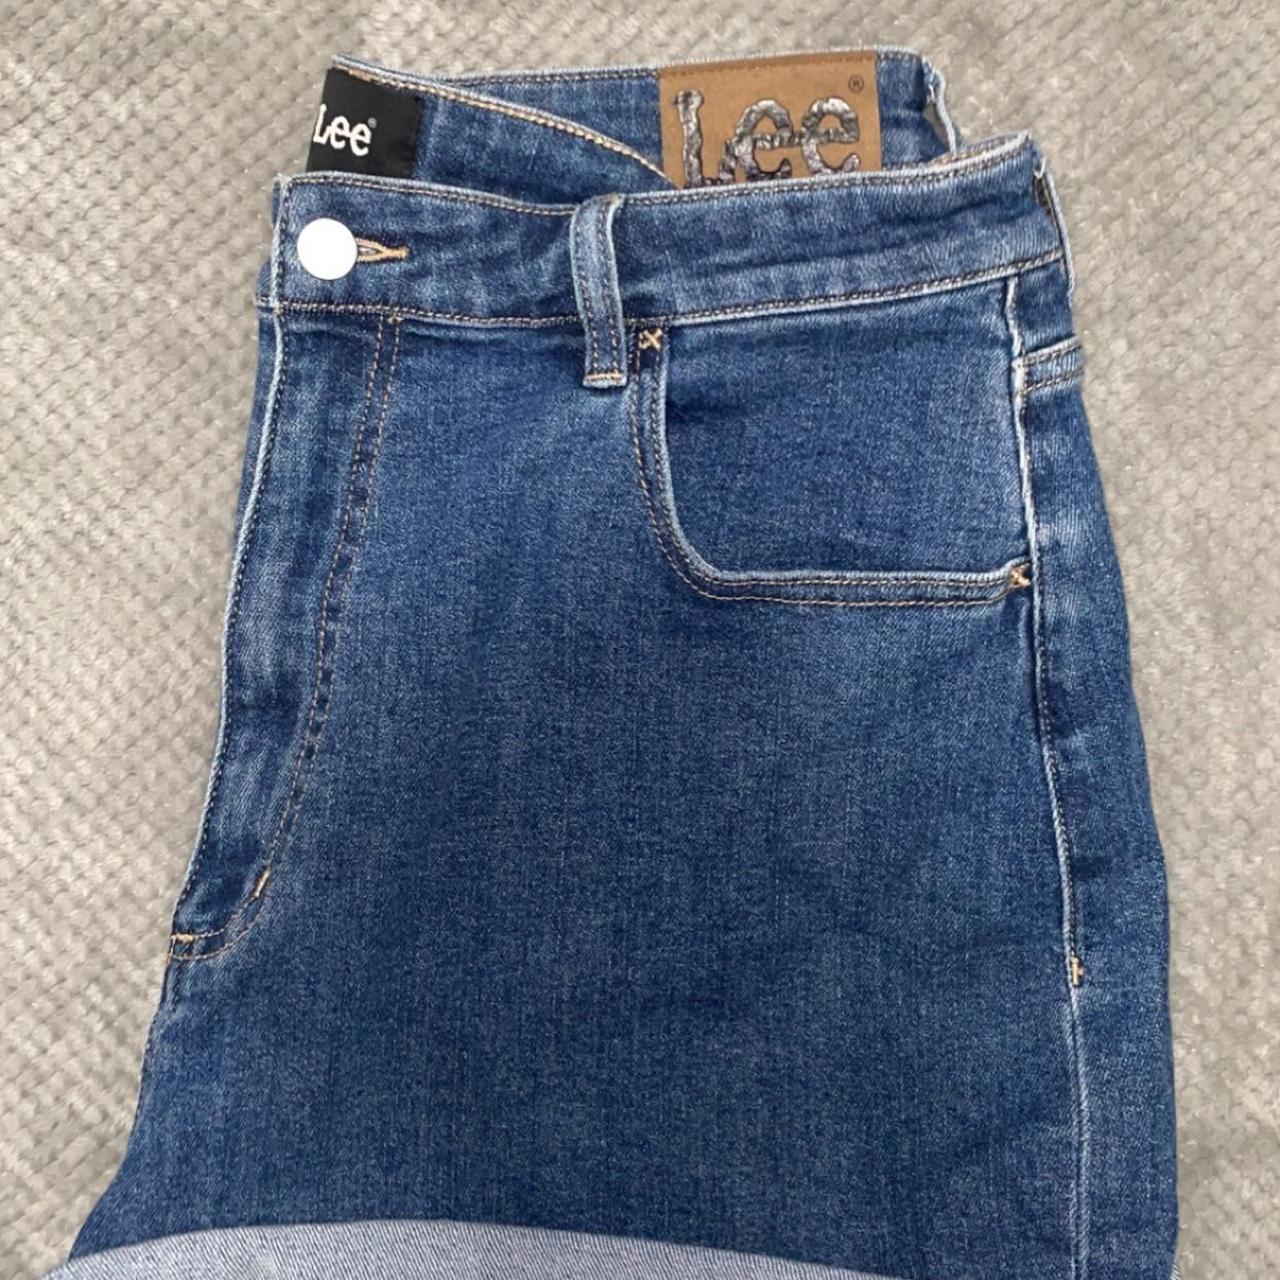 Lee shorts in denim blue, size 16. worn once, great... - Depop